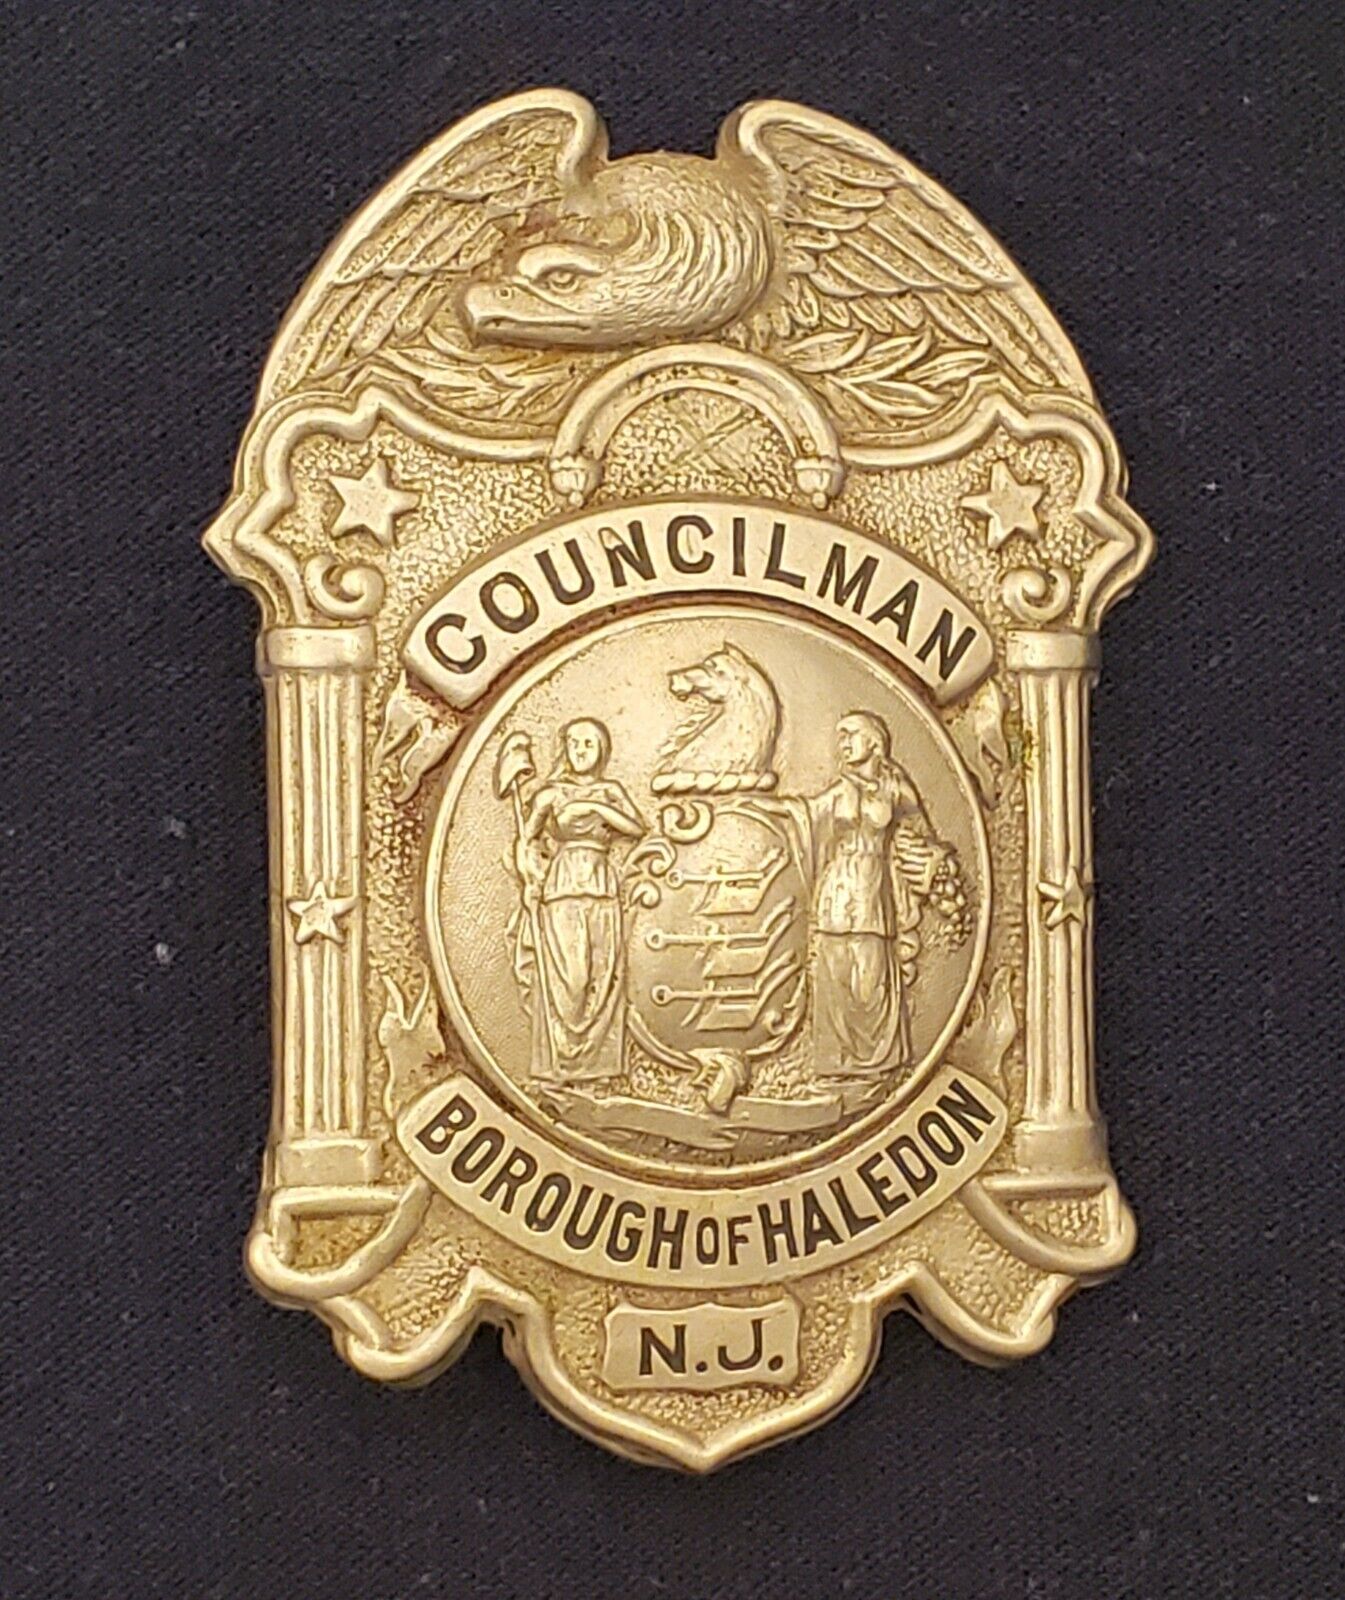 Vintage obsolete 1920s Haledon NJ Councilman's Badge.